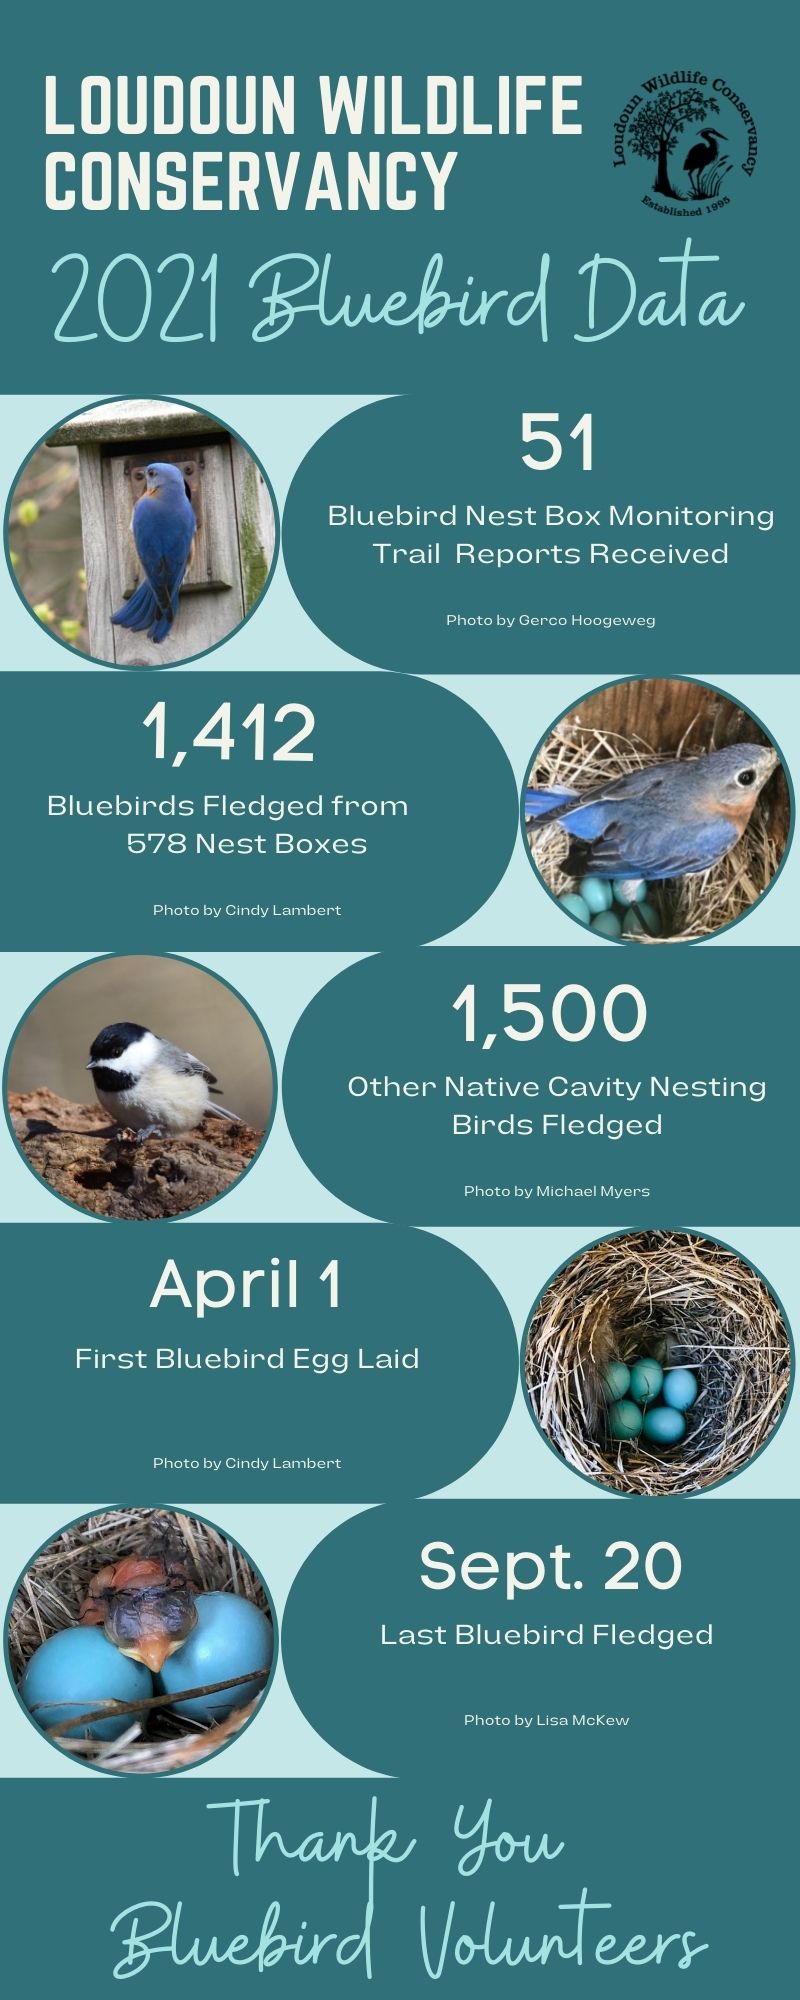 2021 Bluebird Data Infographic